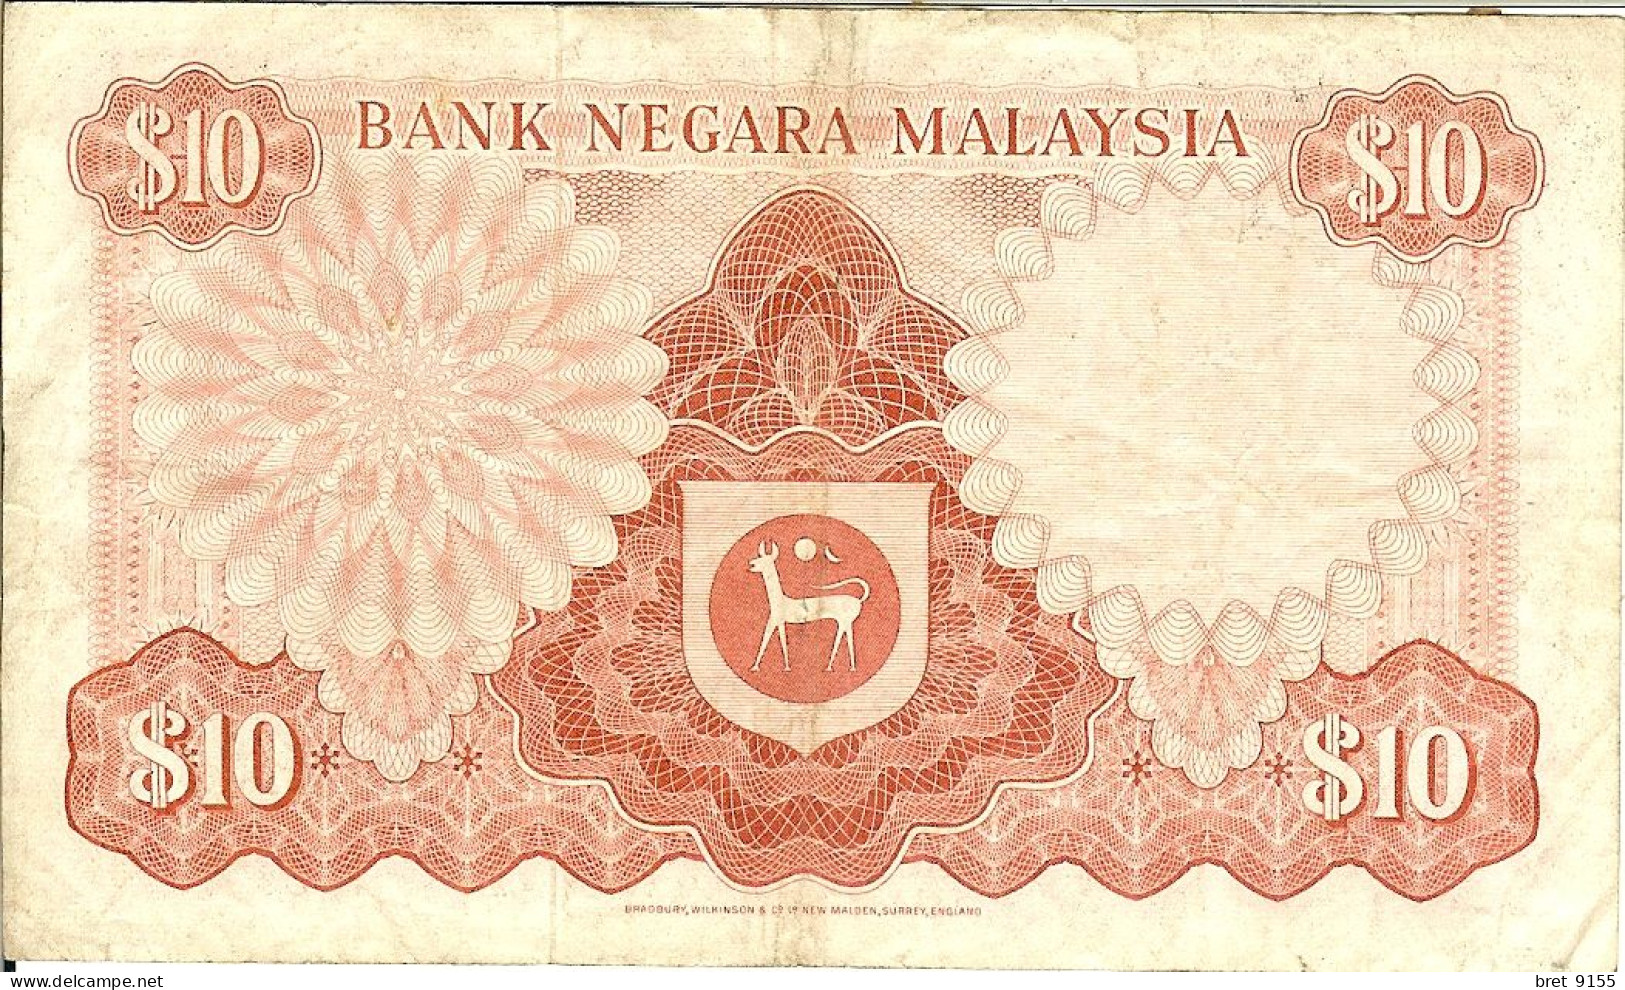 BILLET 10 ASIE MALAYSIE BANK NEGARA MALAYSIA SEPULUH RINGGIT - Other - Asia